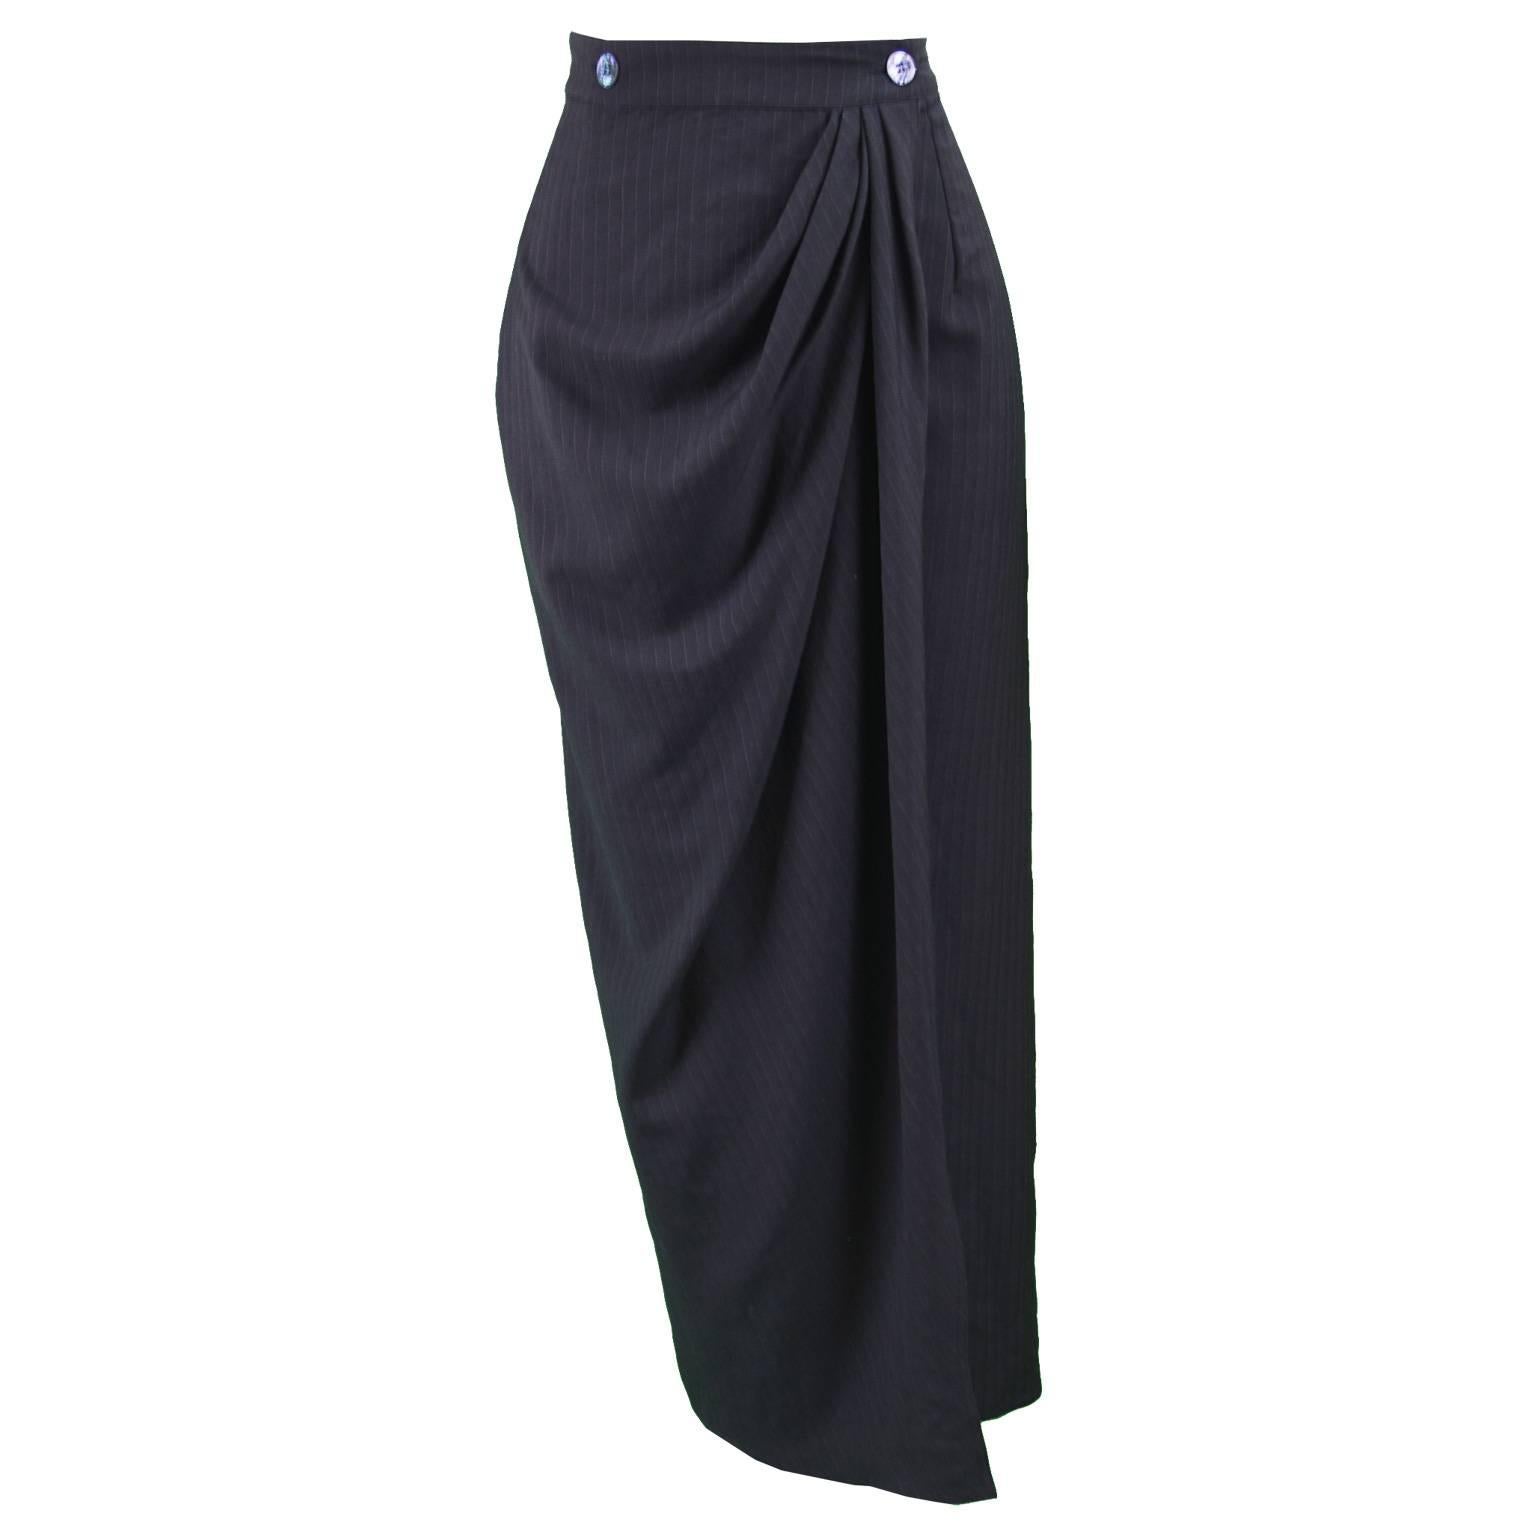 Rifat Ozbek Black Italian Wool Pinstripe Draped Maxi Pencil Skirt , 1990s For Sale